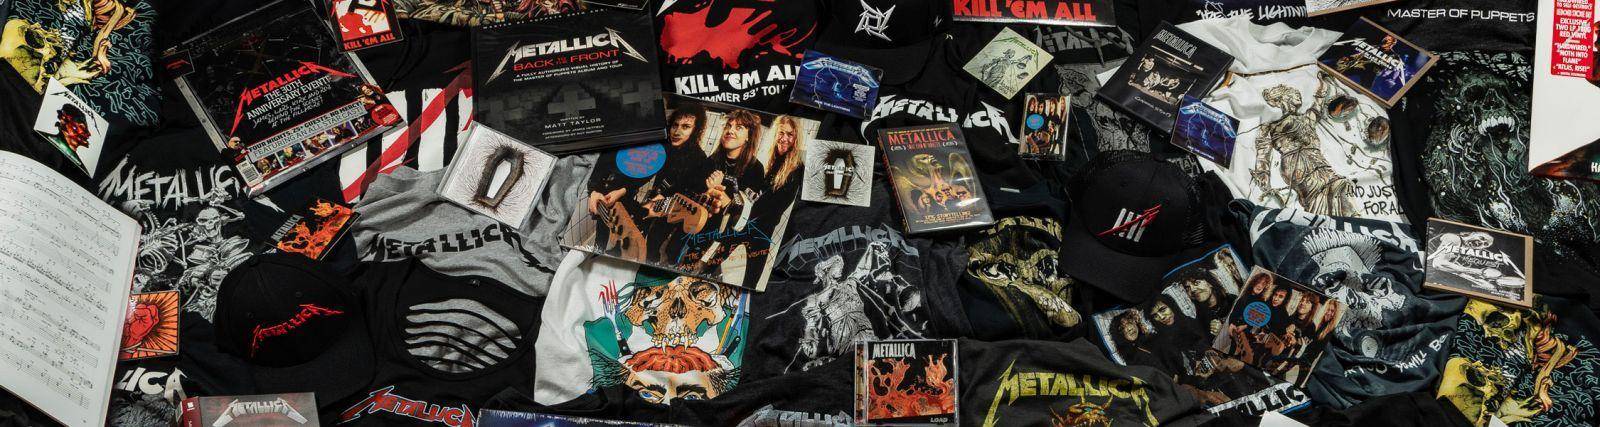 Metallica Merchandise (Vinyl Club)